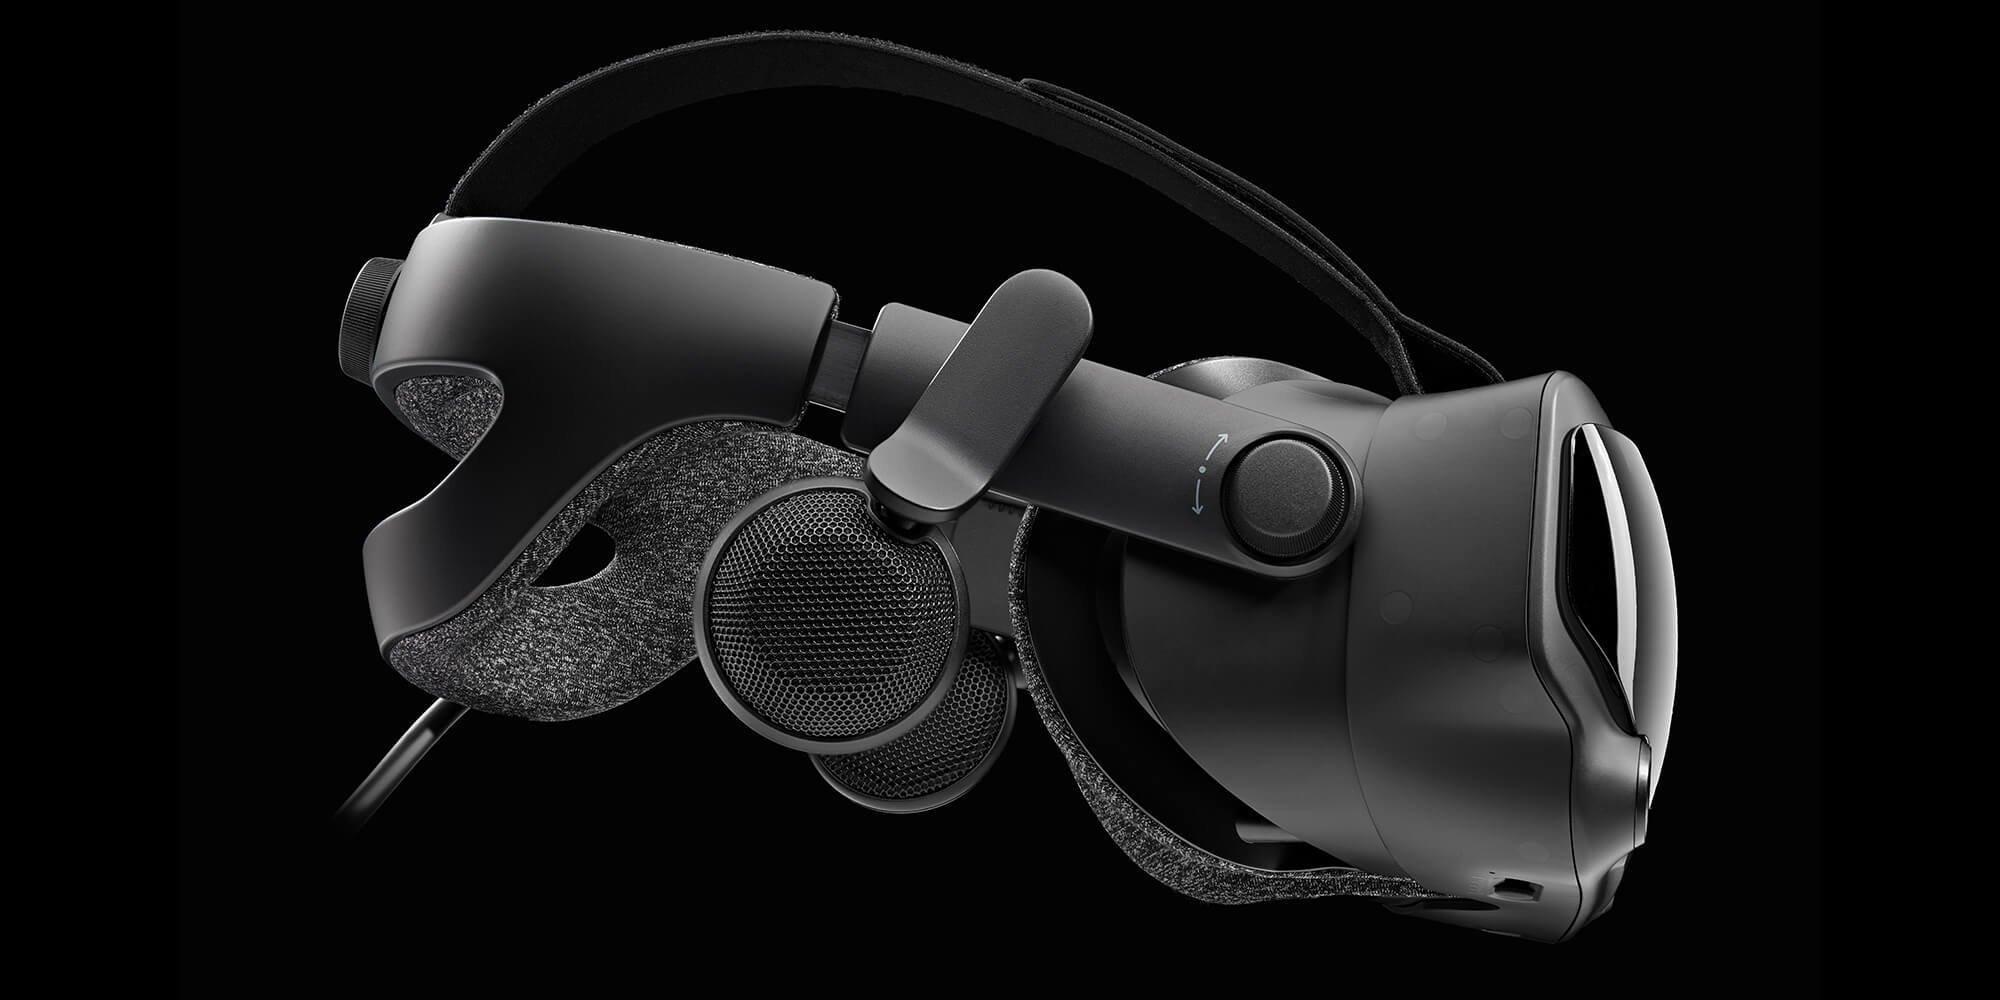 Trade In Valve Index VR Headset